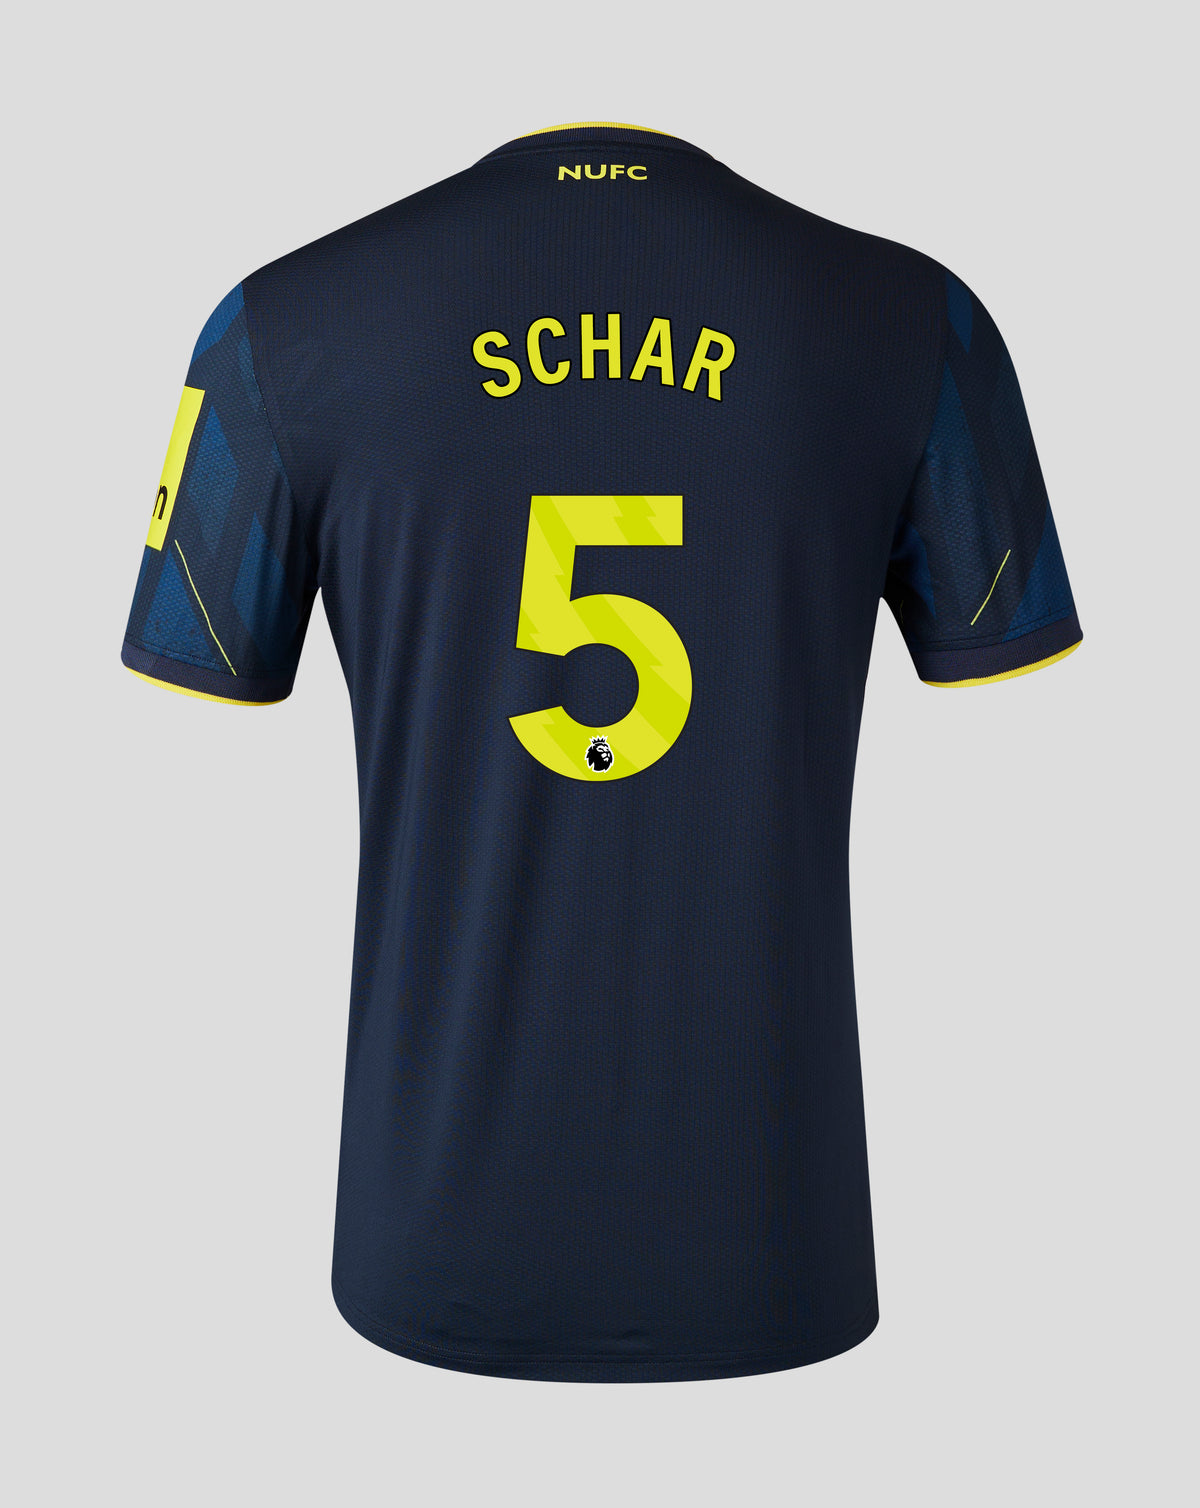 Schar - Third 